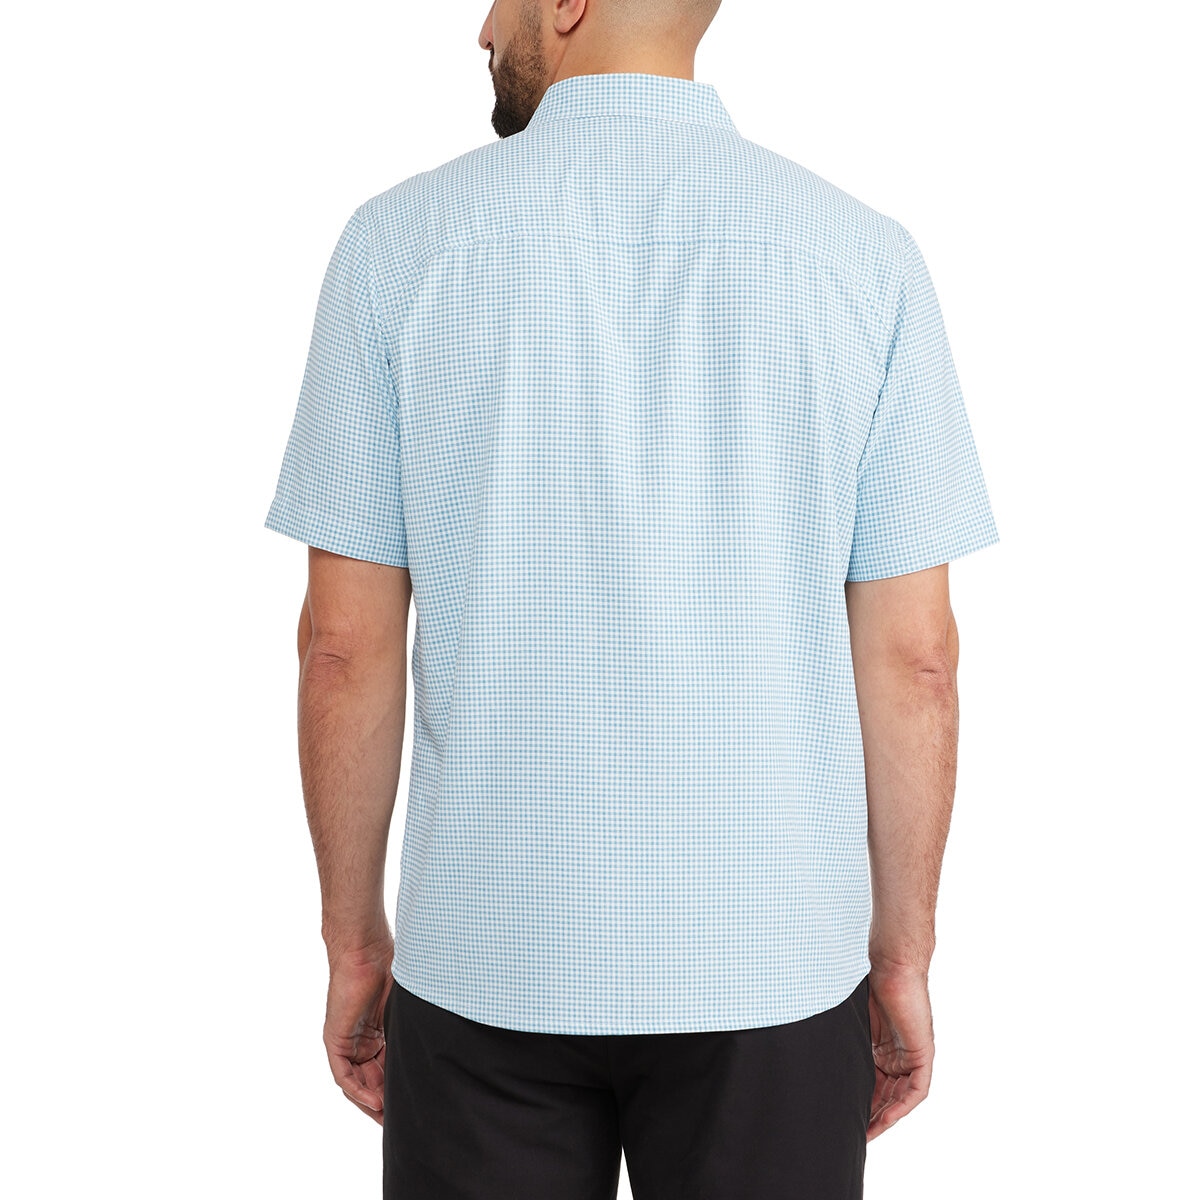 Hi-Tec Camisa de manga corta para Caballero Azul claro